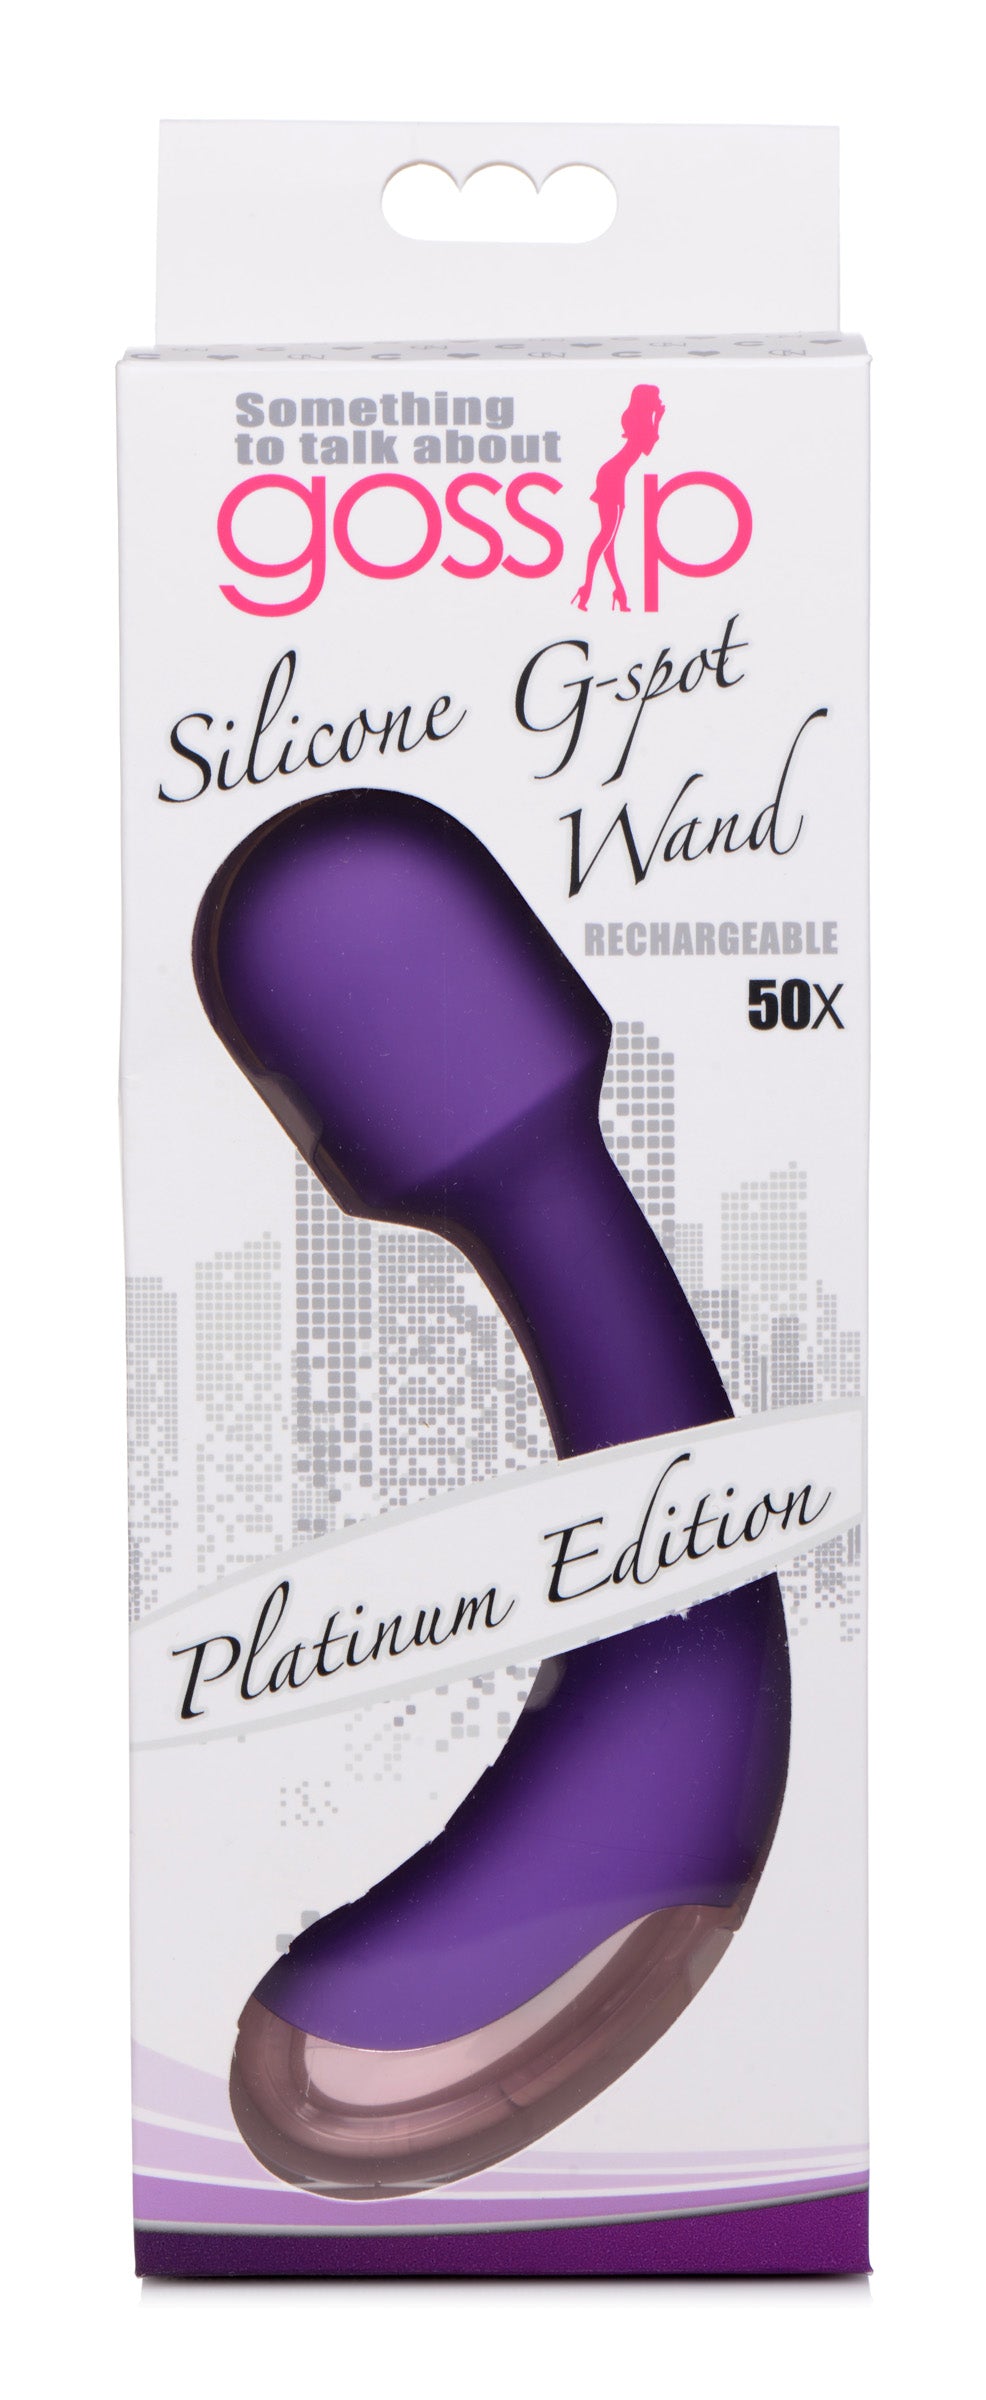 50X Silicone G-spot Wand - Purple